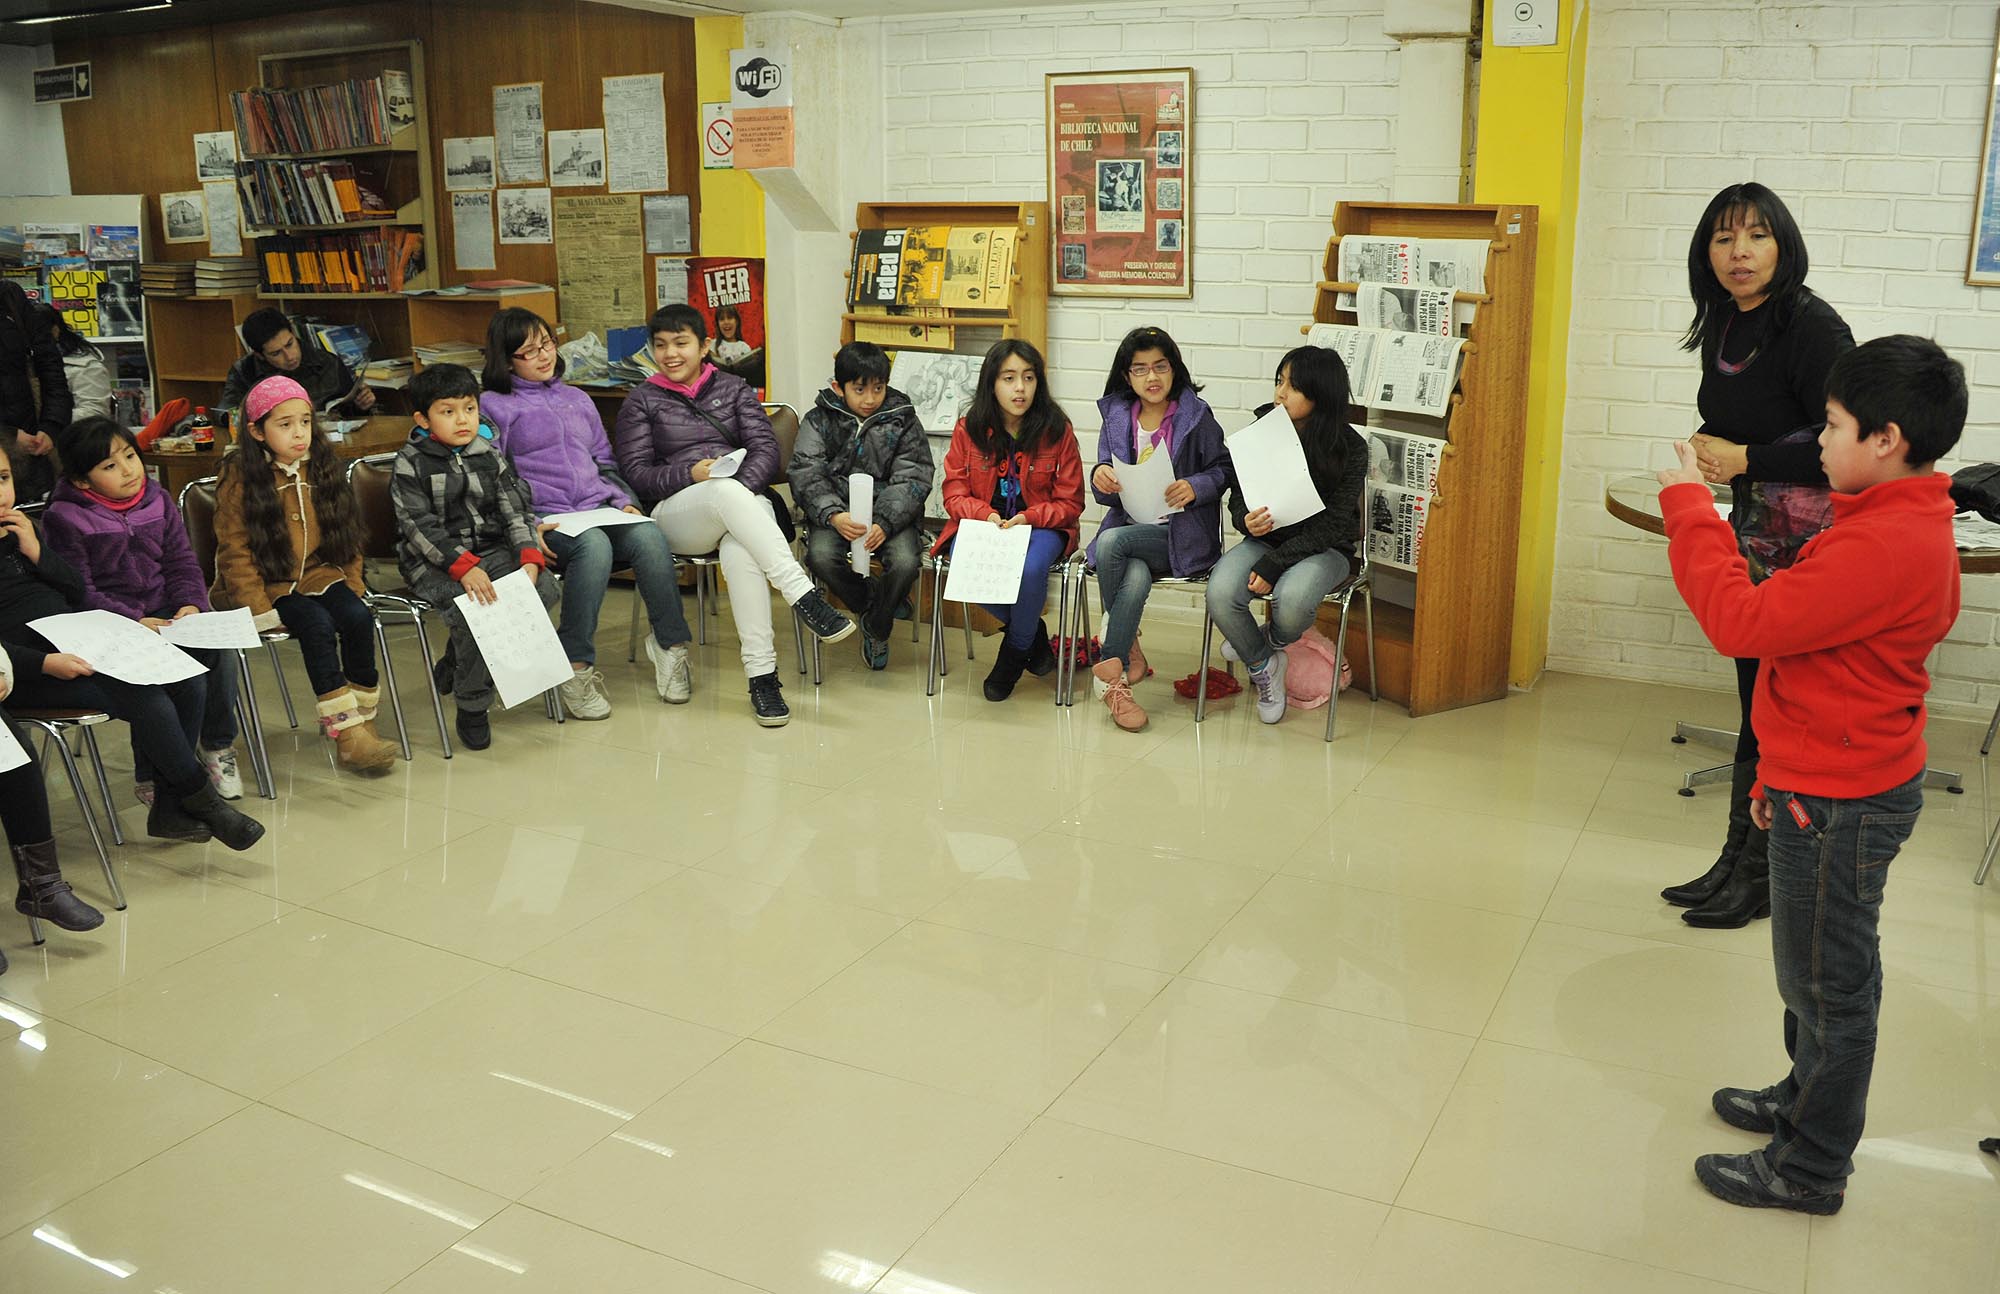 Municipalidad De Punta Arenas Invita a taller infantil de Lengua de Señas